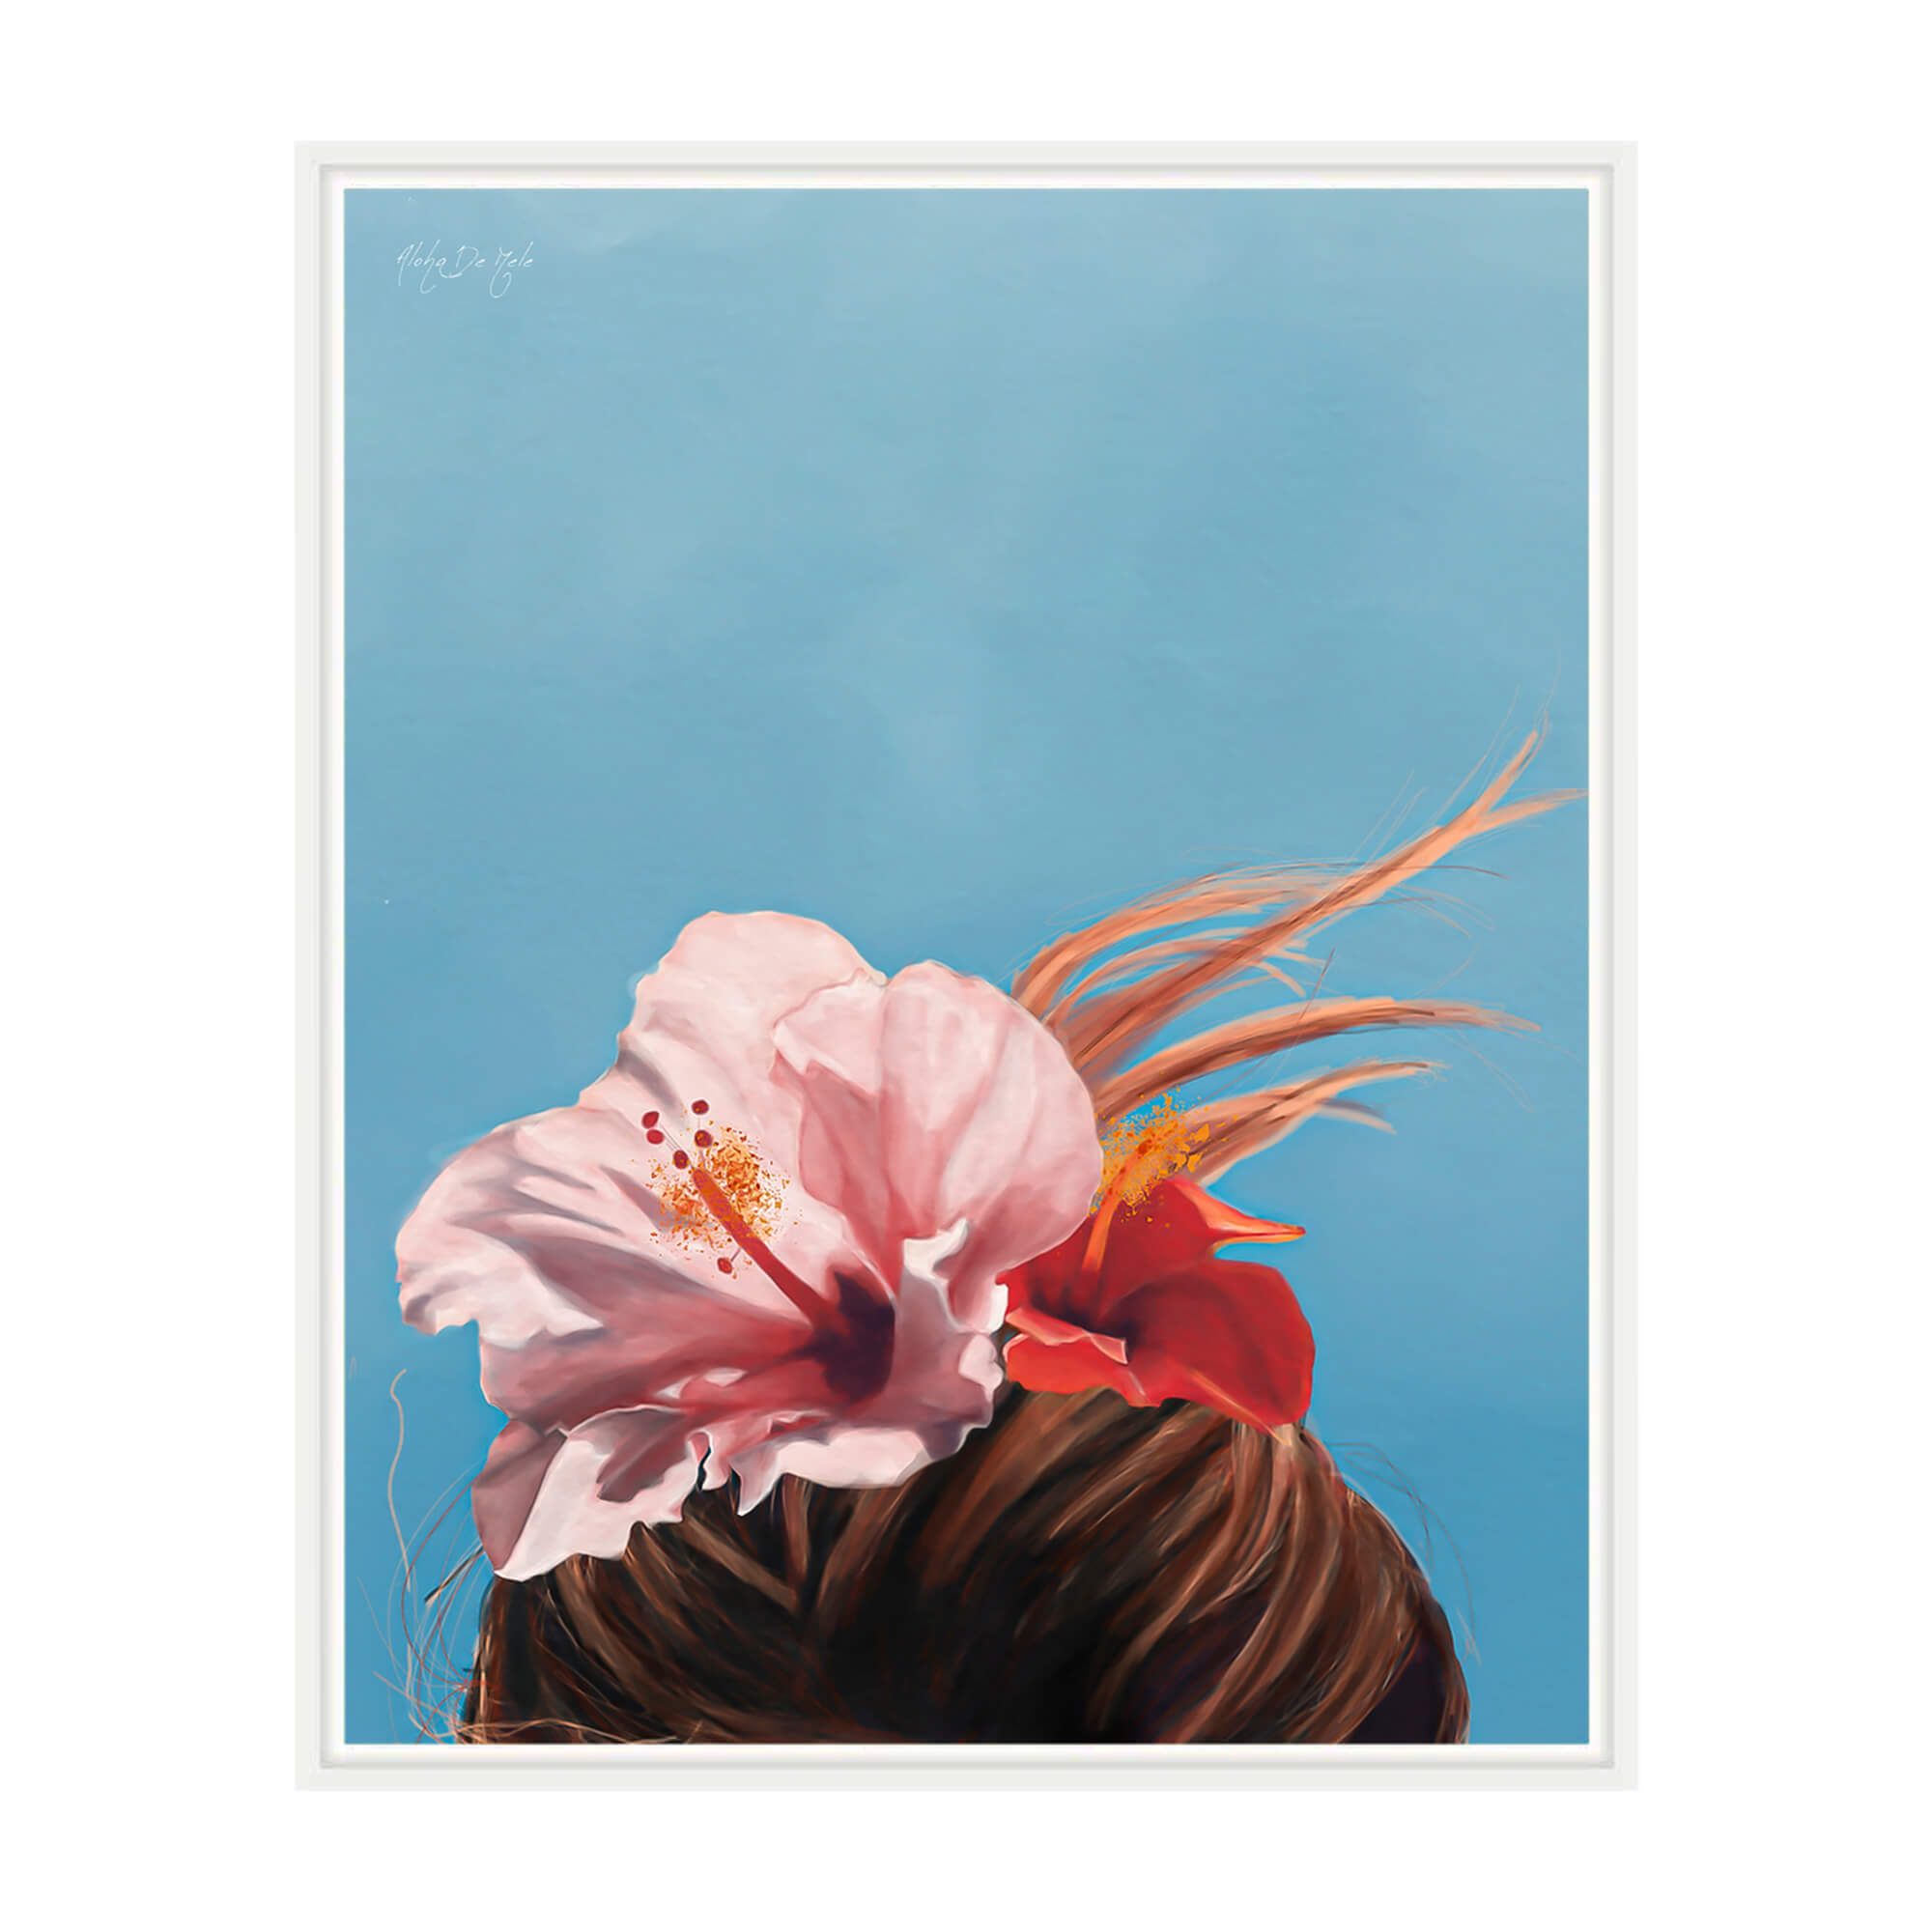 A canvas giclée art print of a woman's hair with colorful hibiscus flowers by Hawaii artist Aloha De Mele